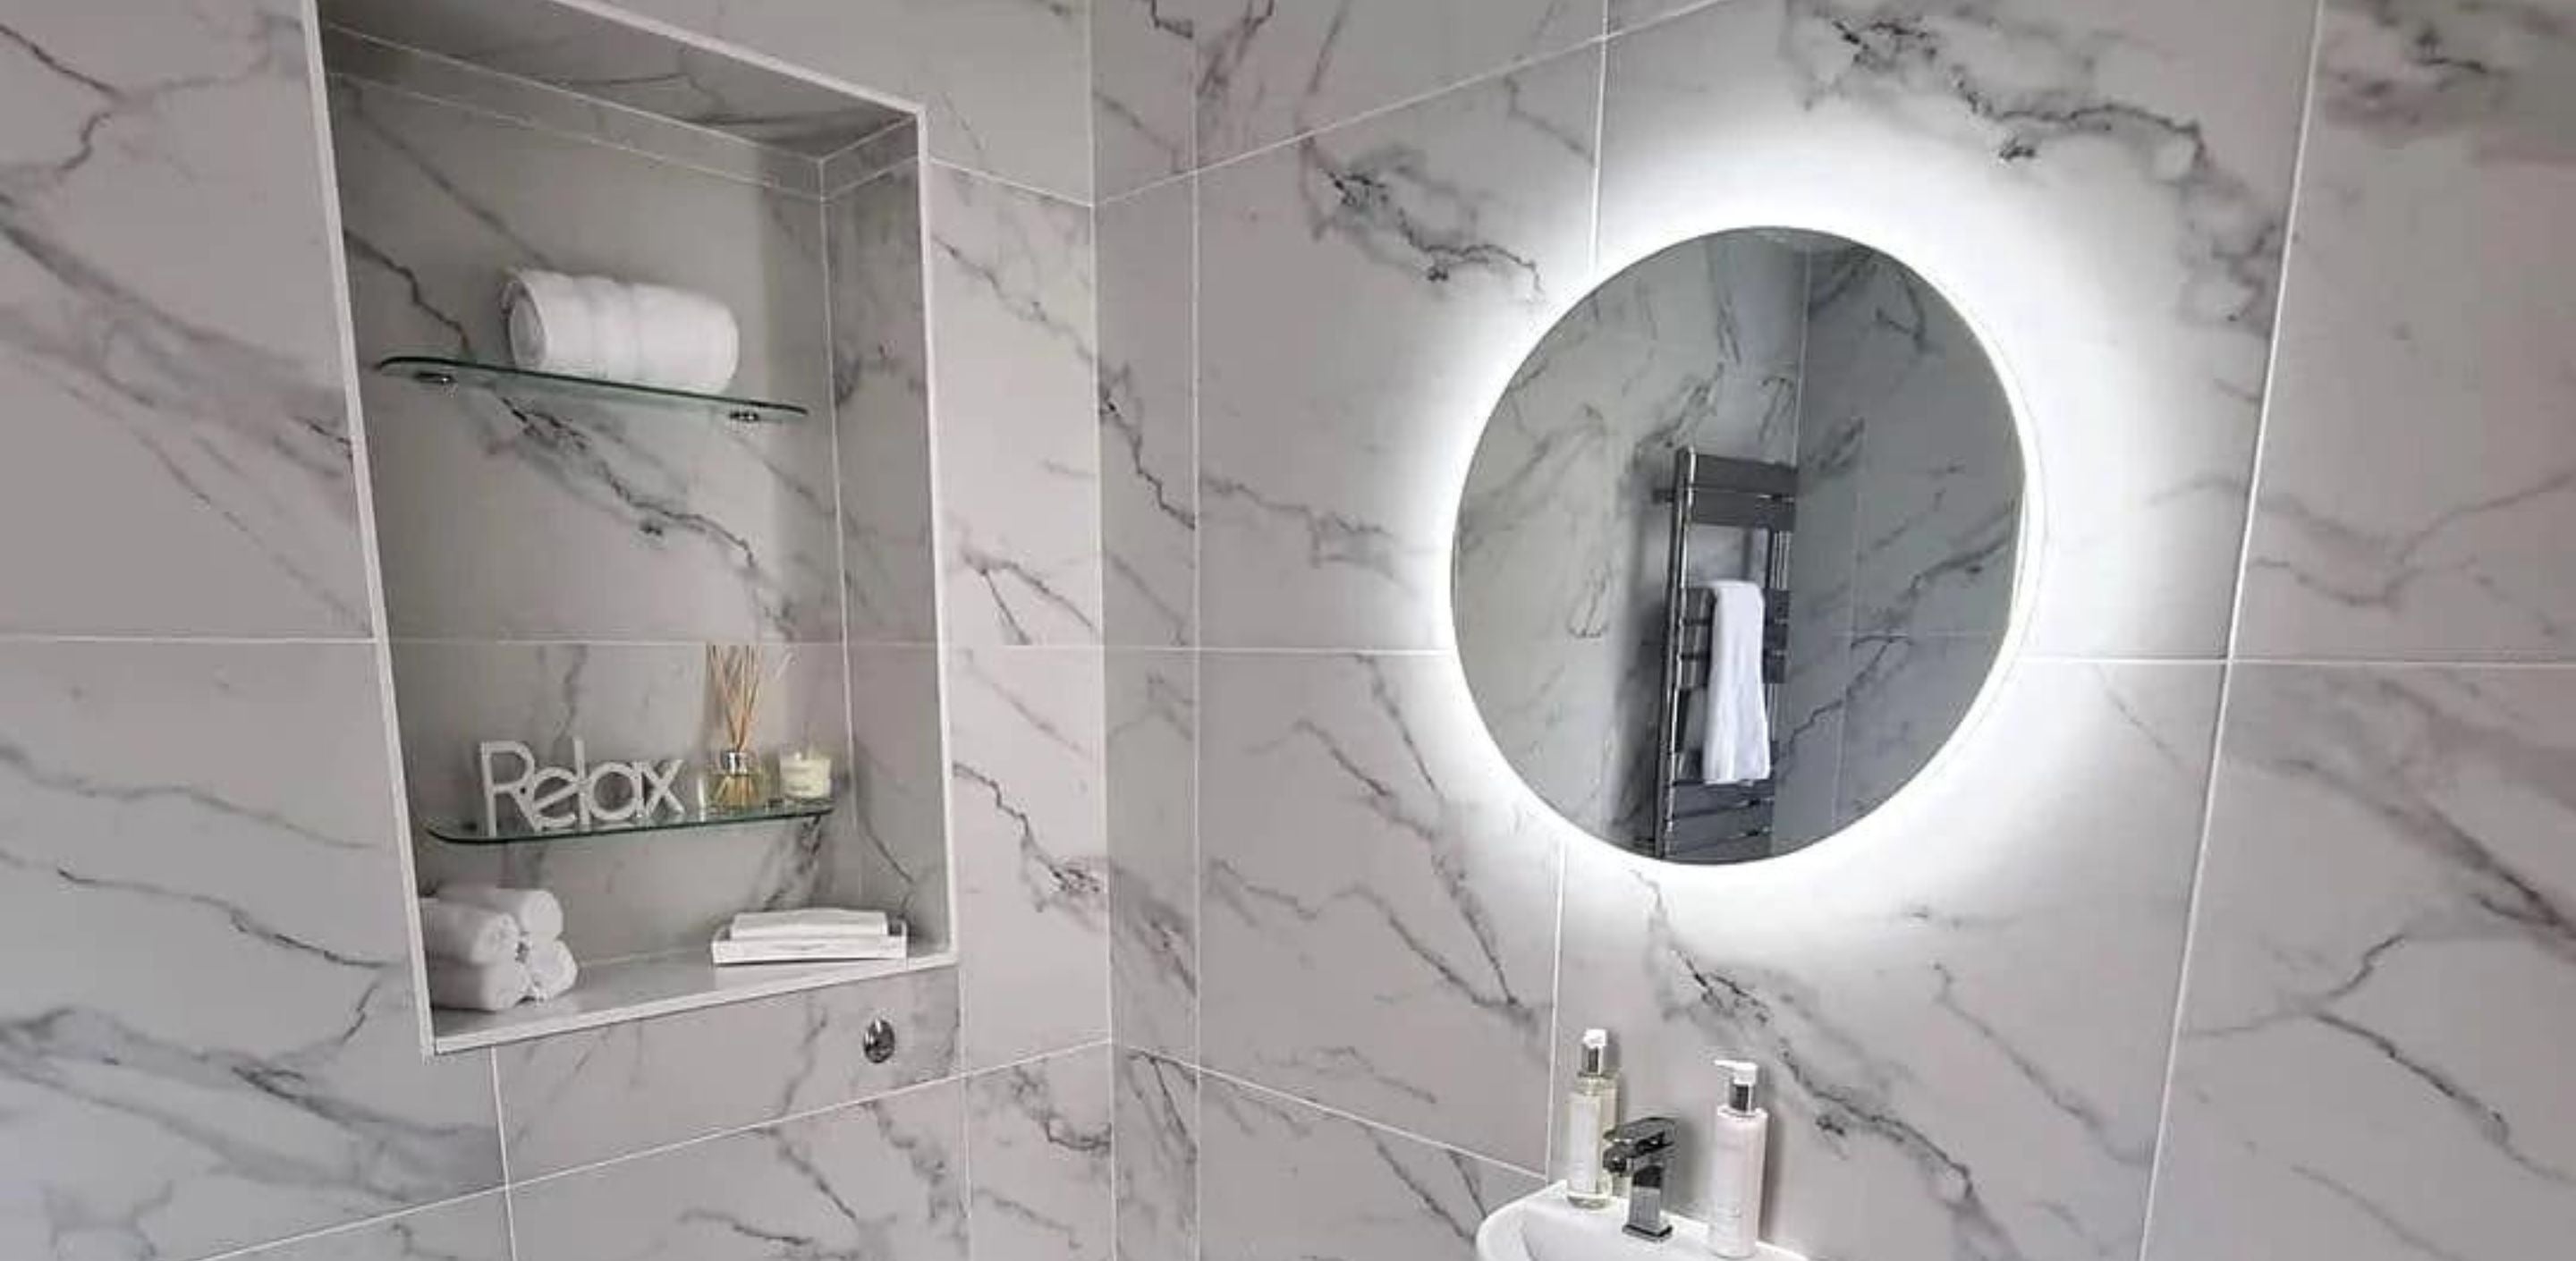 Where to place a bathroom mirror